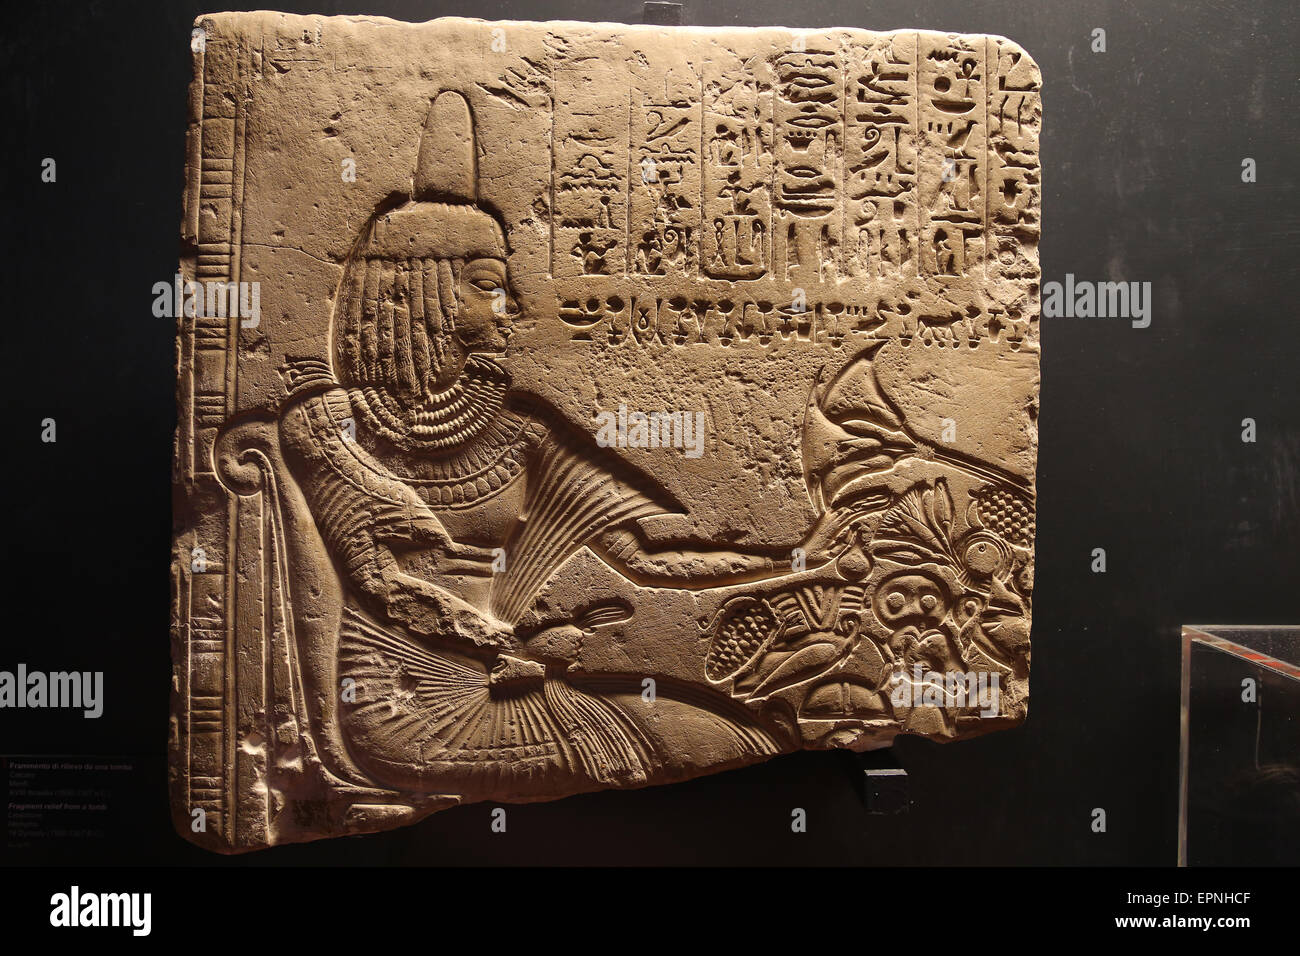 Arte Egizia Stele dalla tomba di Menfi. Xviii dinastia, 1300-1350 A.C. Musei Vaticani. Foto Stock